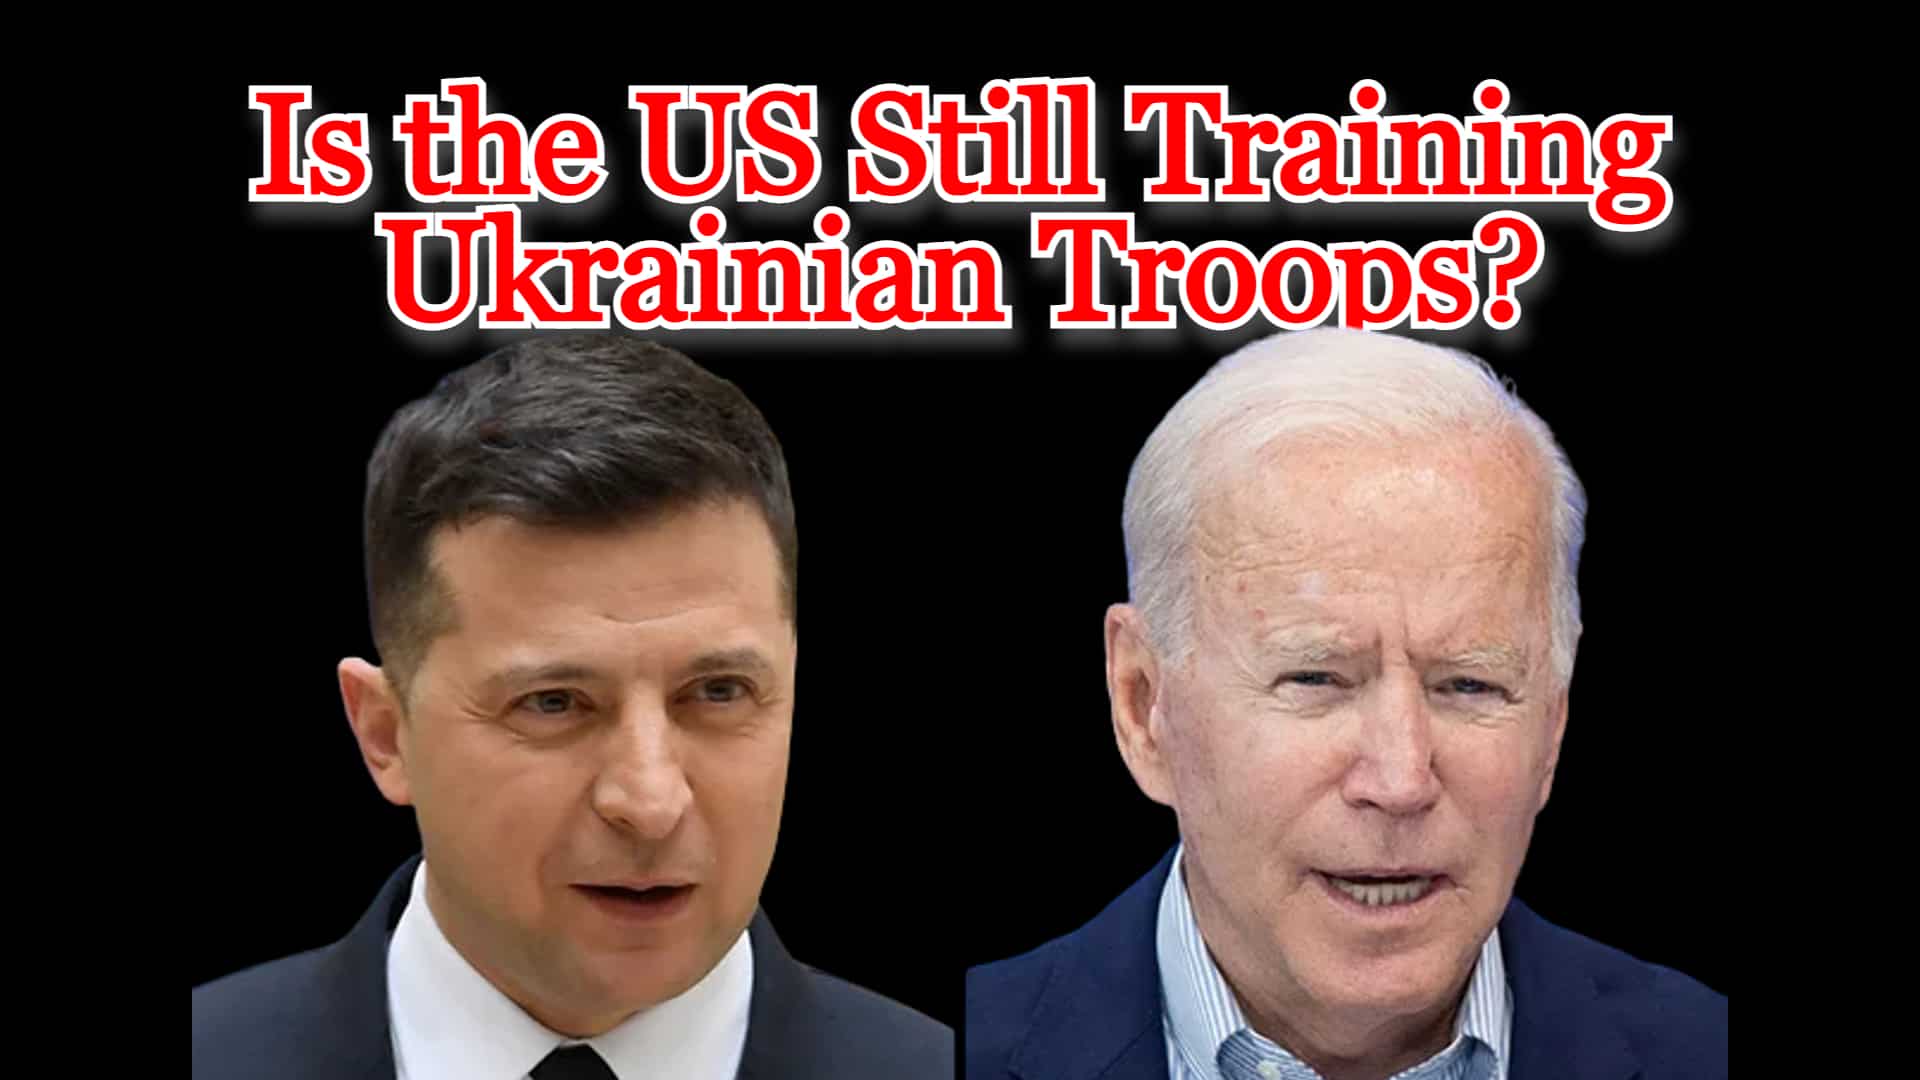 COI #256: Is the US Still Training Ukrainian Troops?